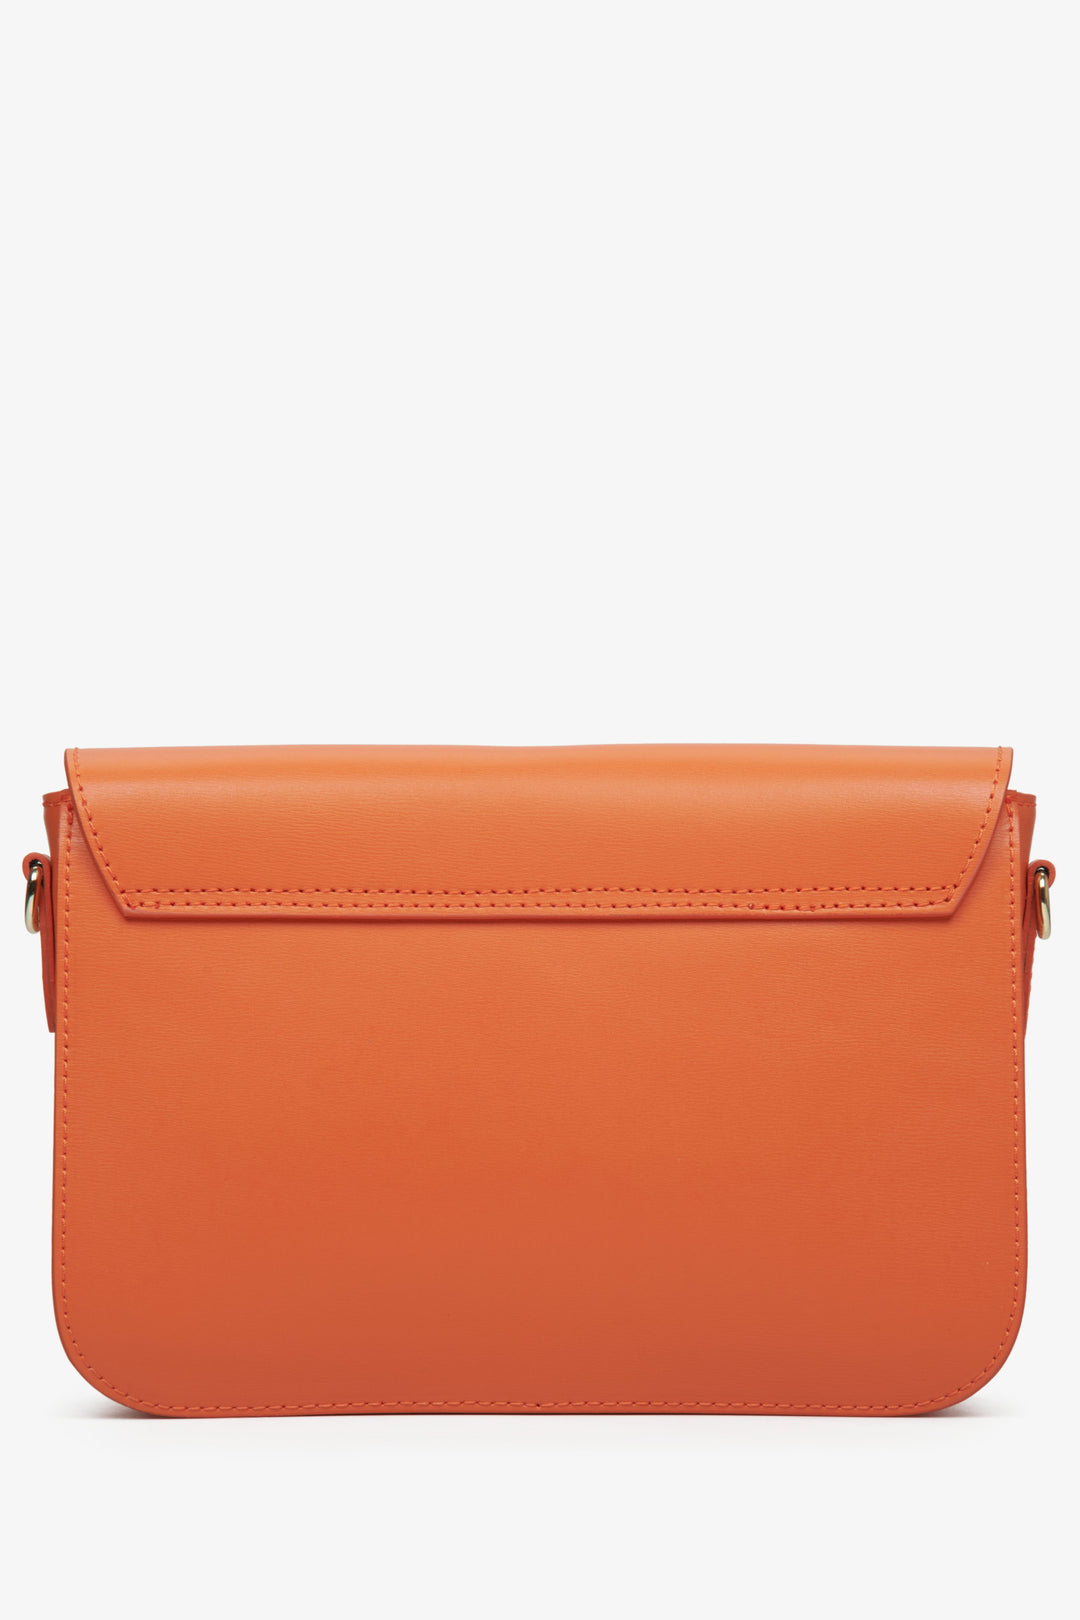 Orange leather Estro women's handbag made of Italian natural fabrics - reverse.